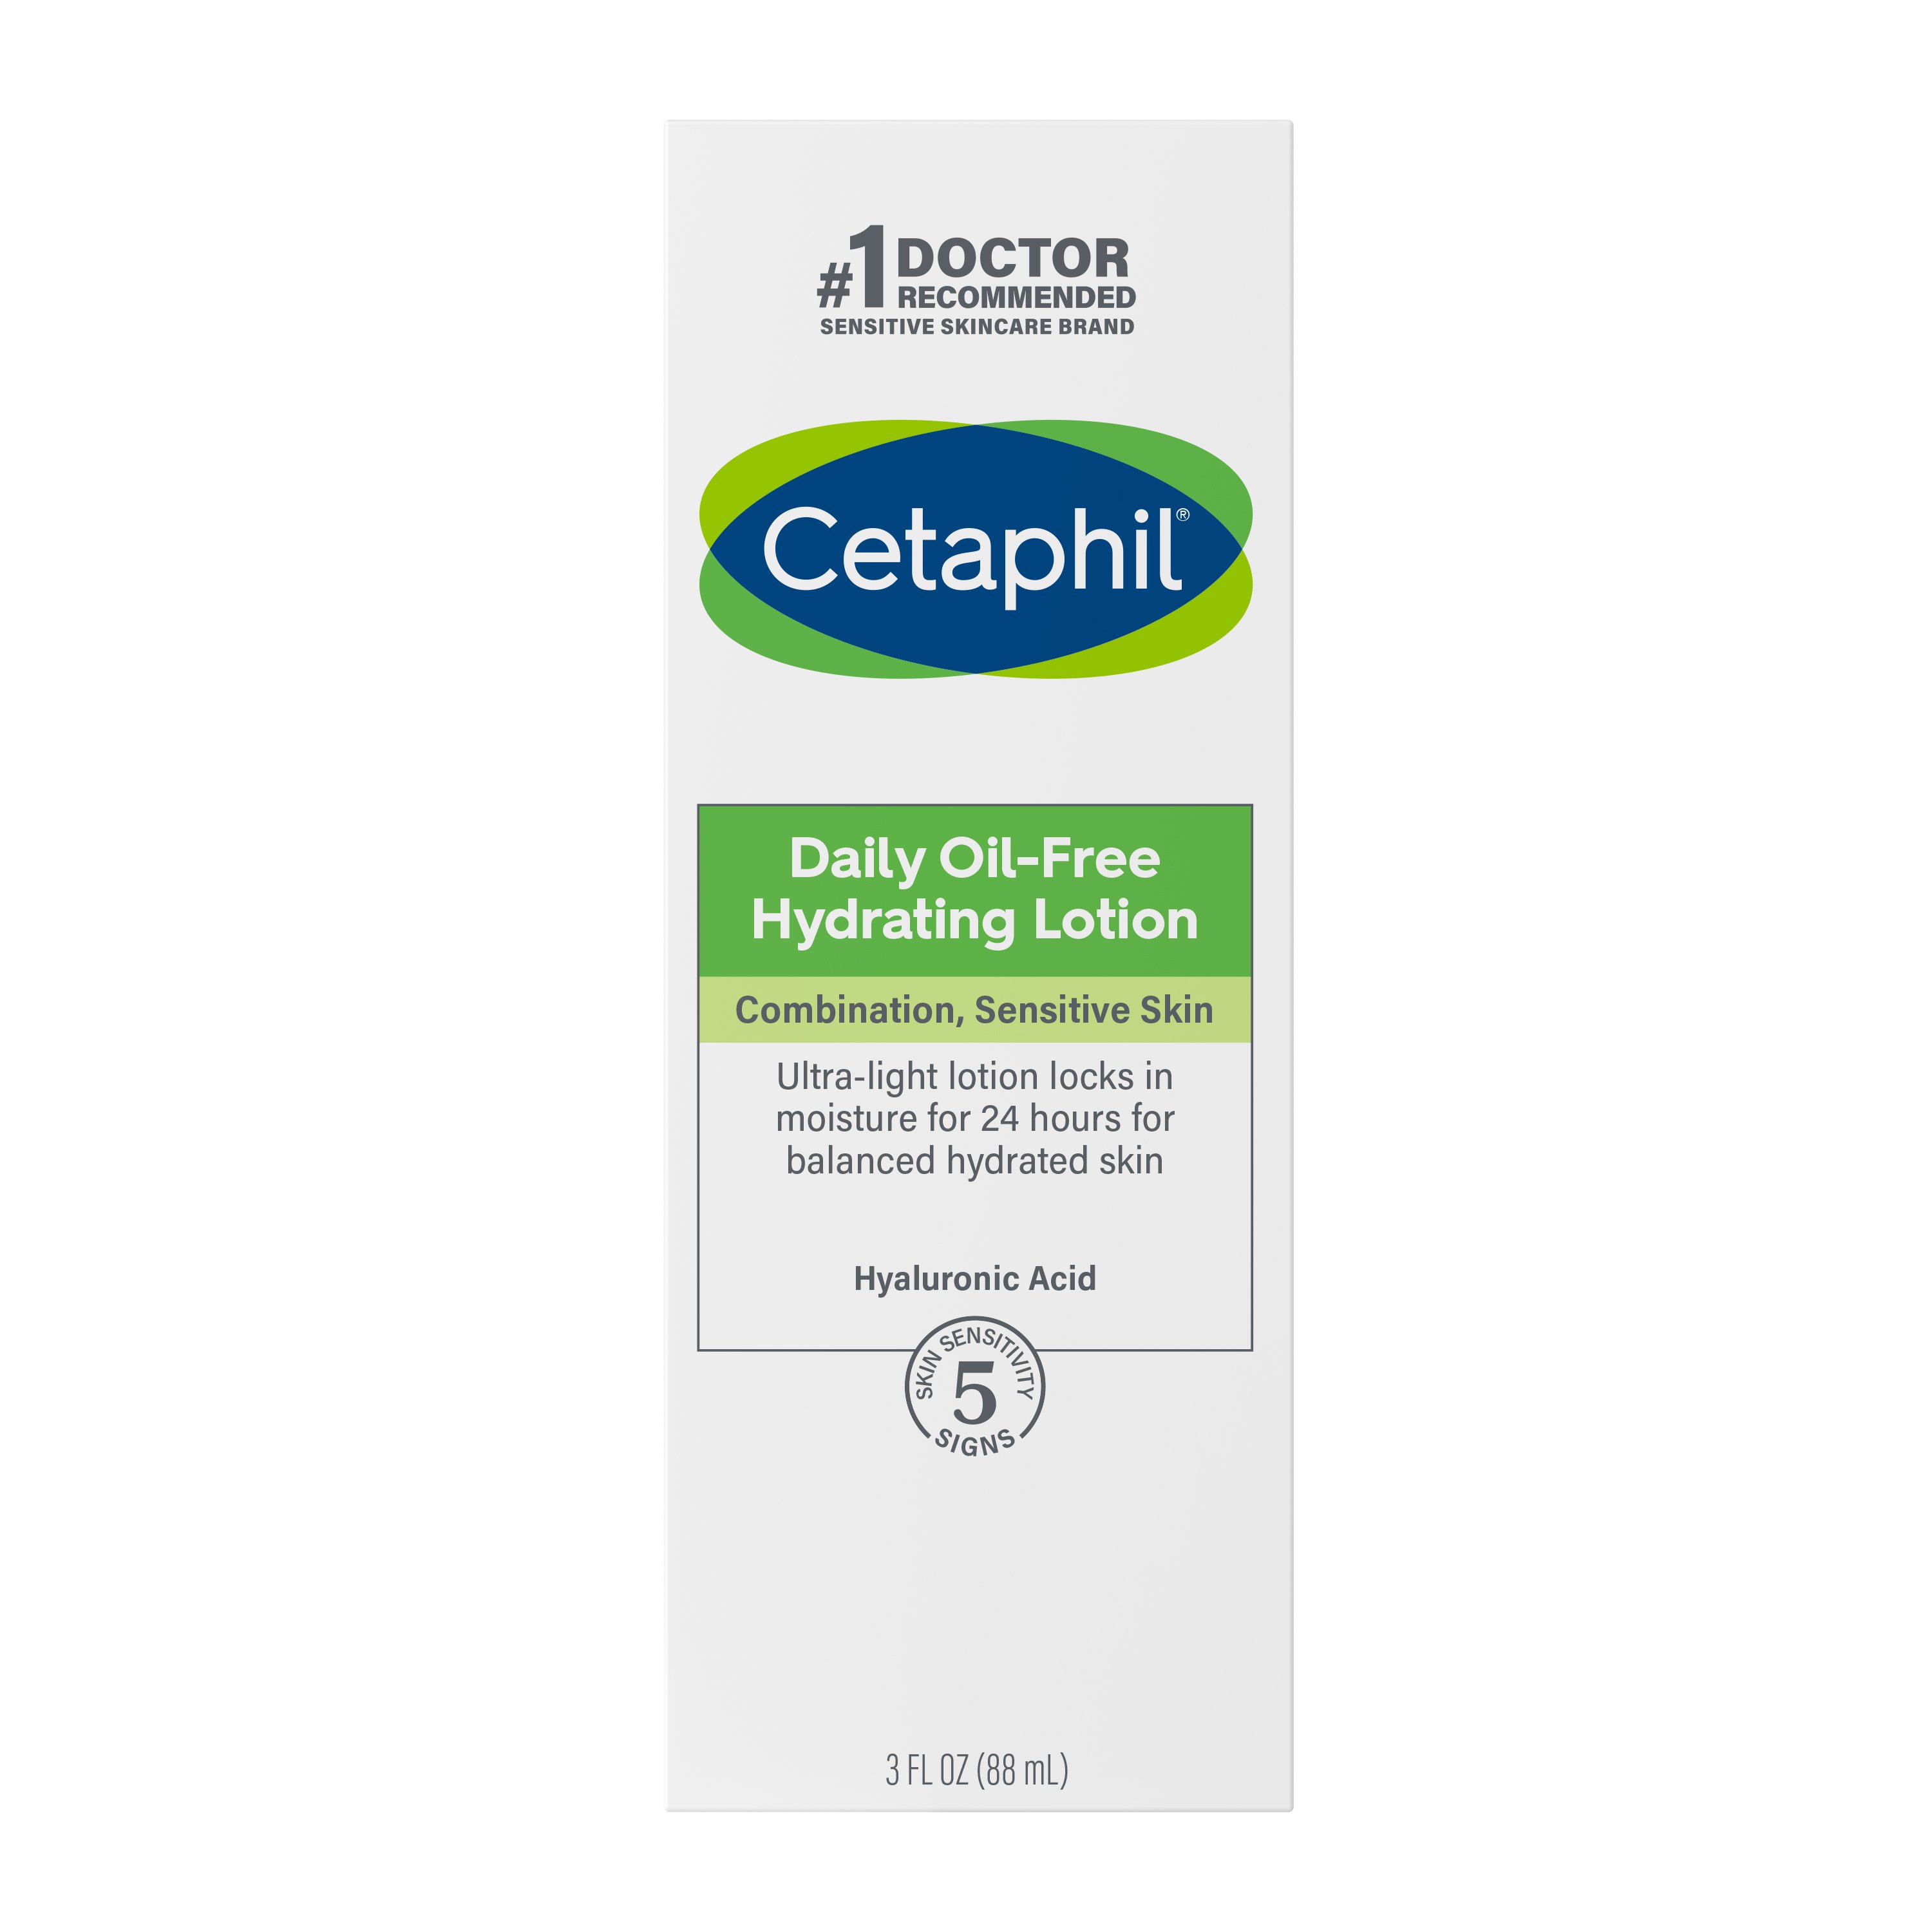 Cetaphil Moisturizing Cream - Dry, Sensitive Skin - Reviews